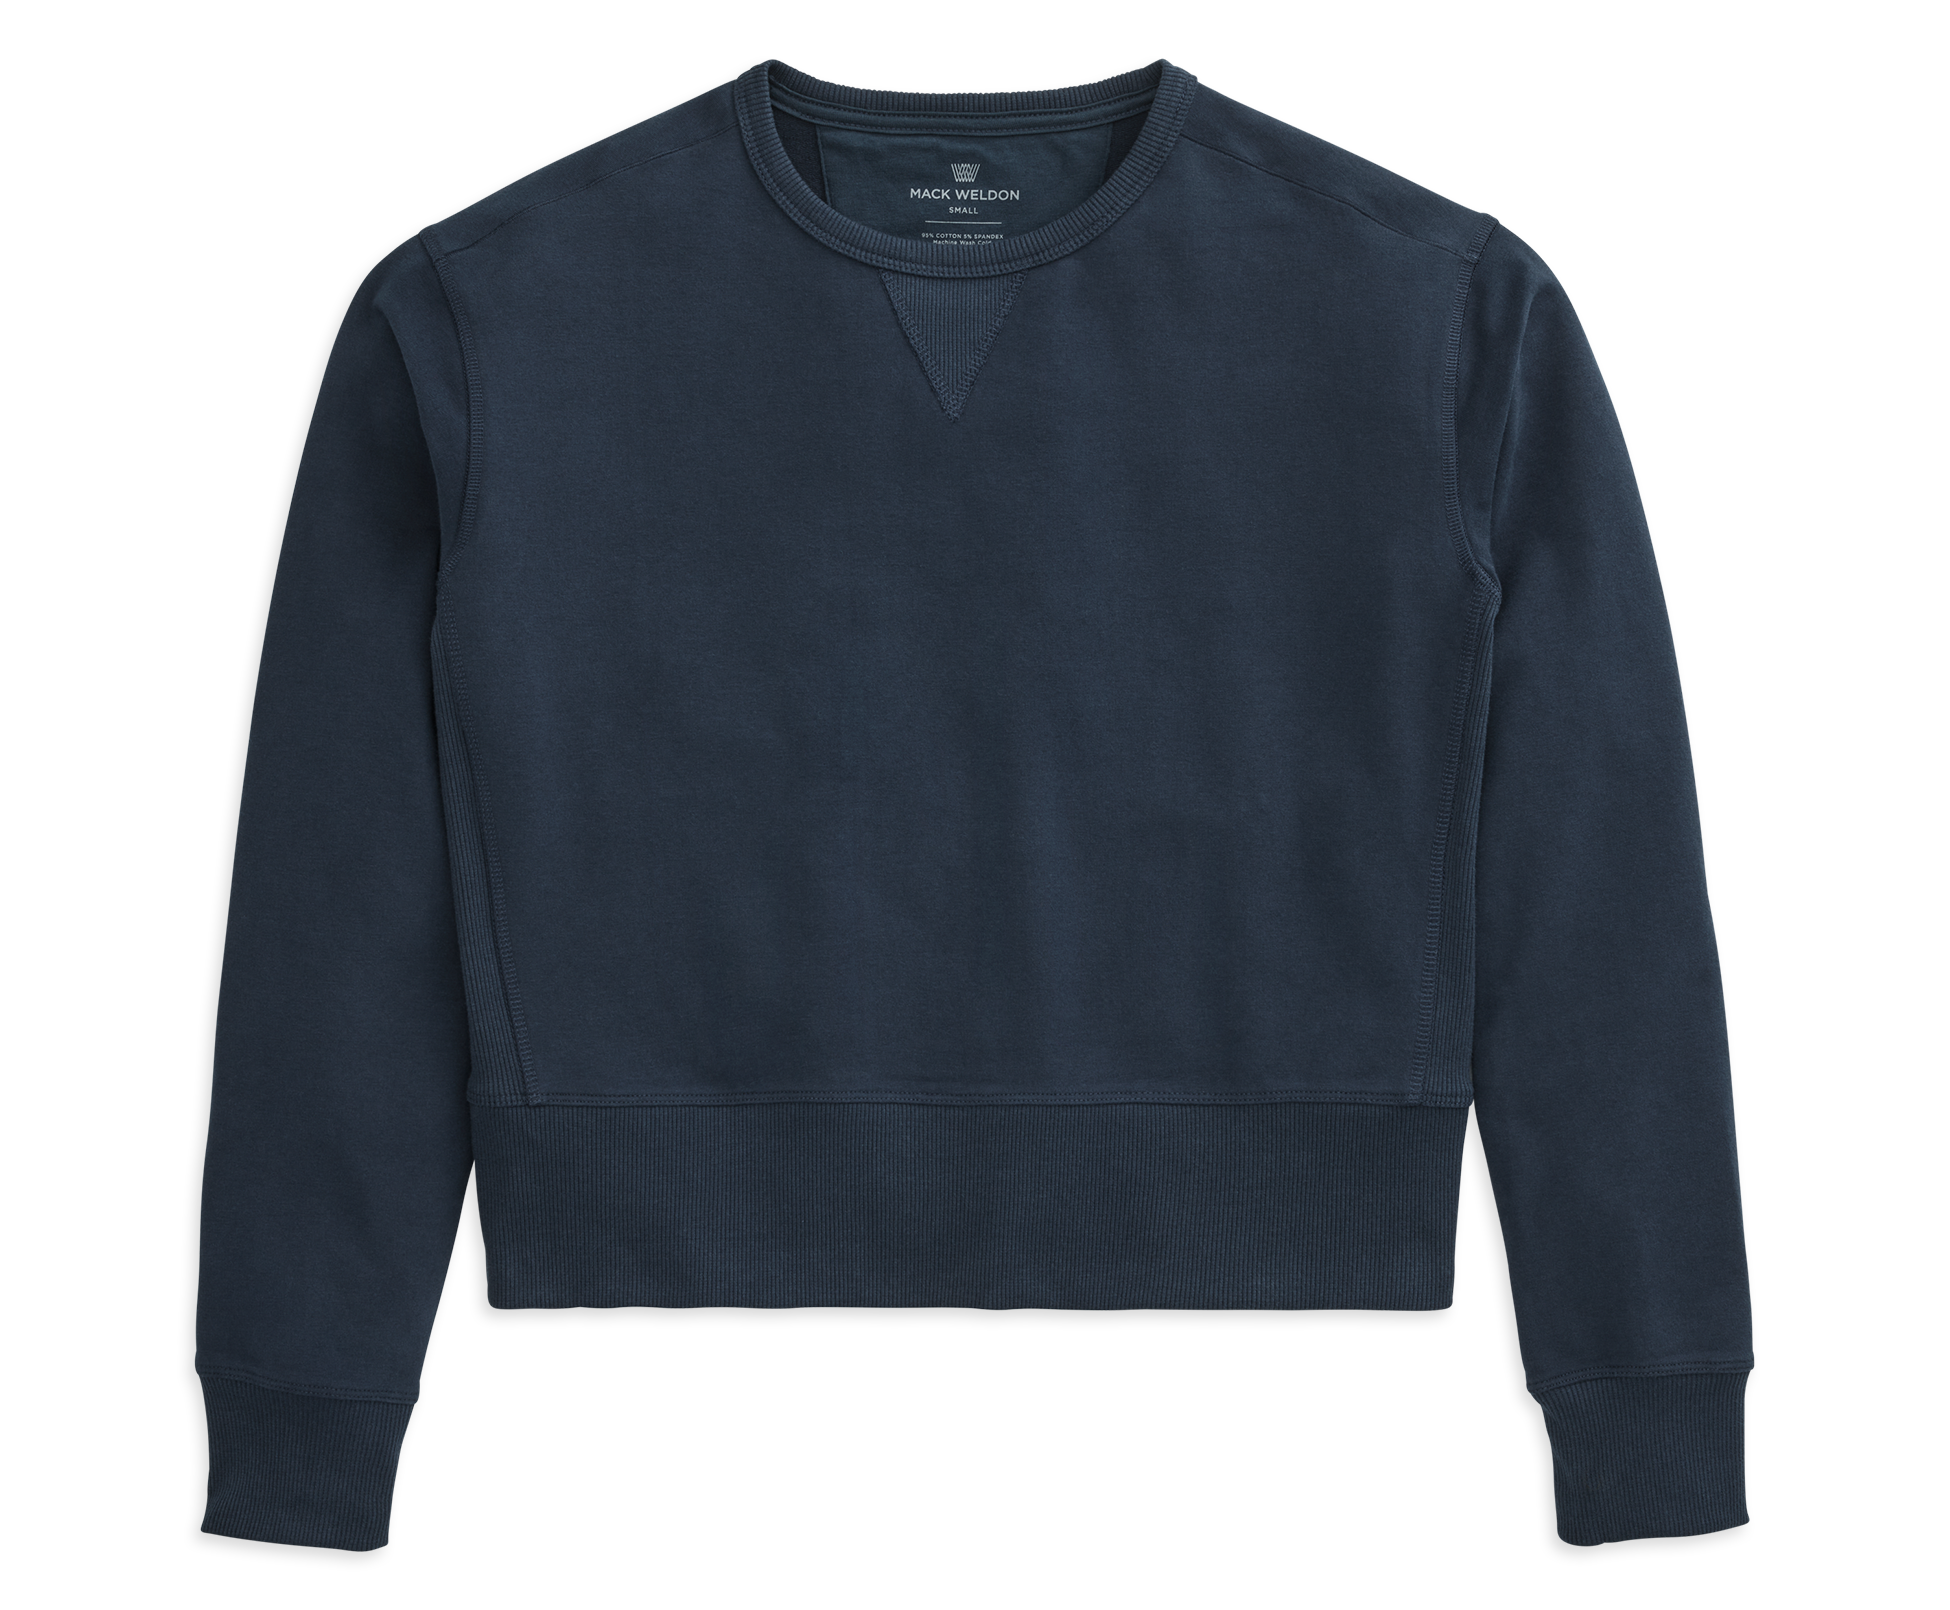 Women's Navy Brushed Back Crew Neck Sweatshirt from Crew Clothing Company